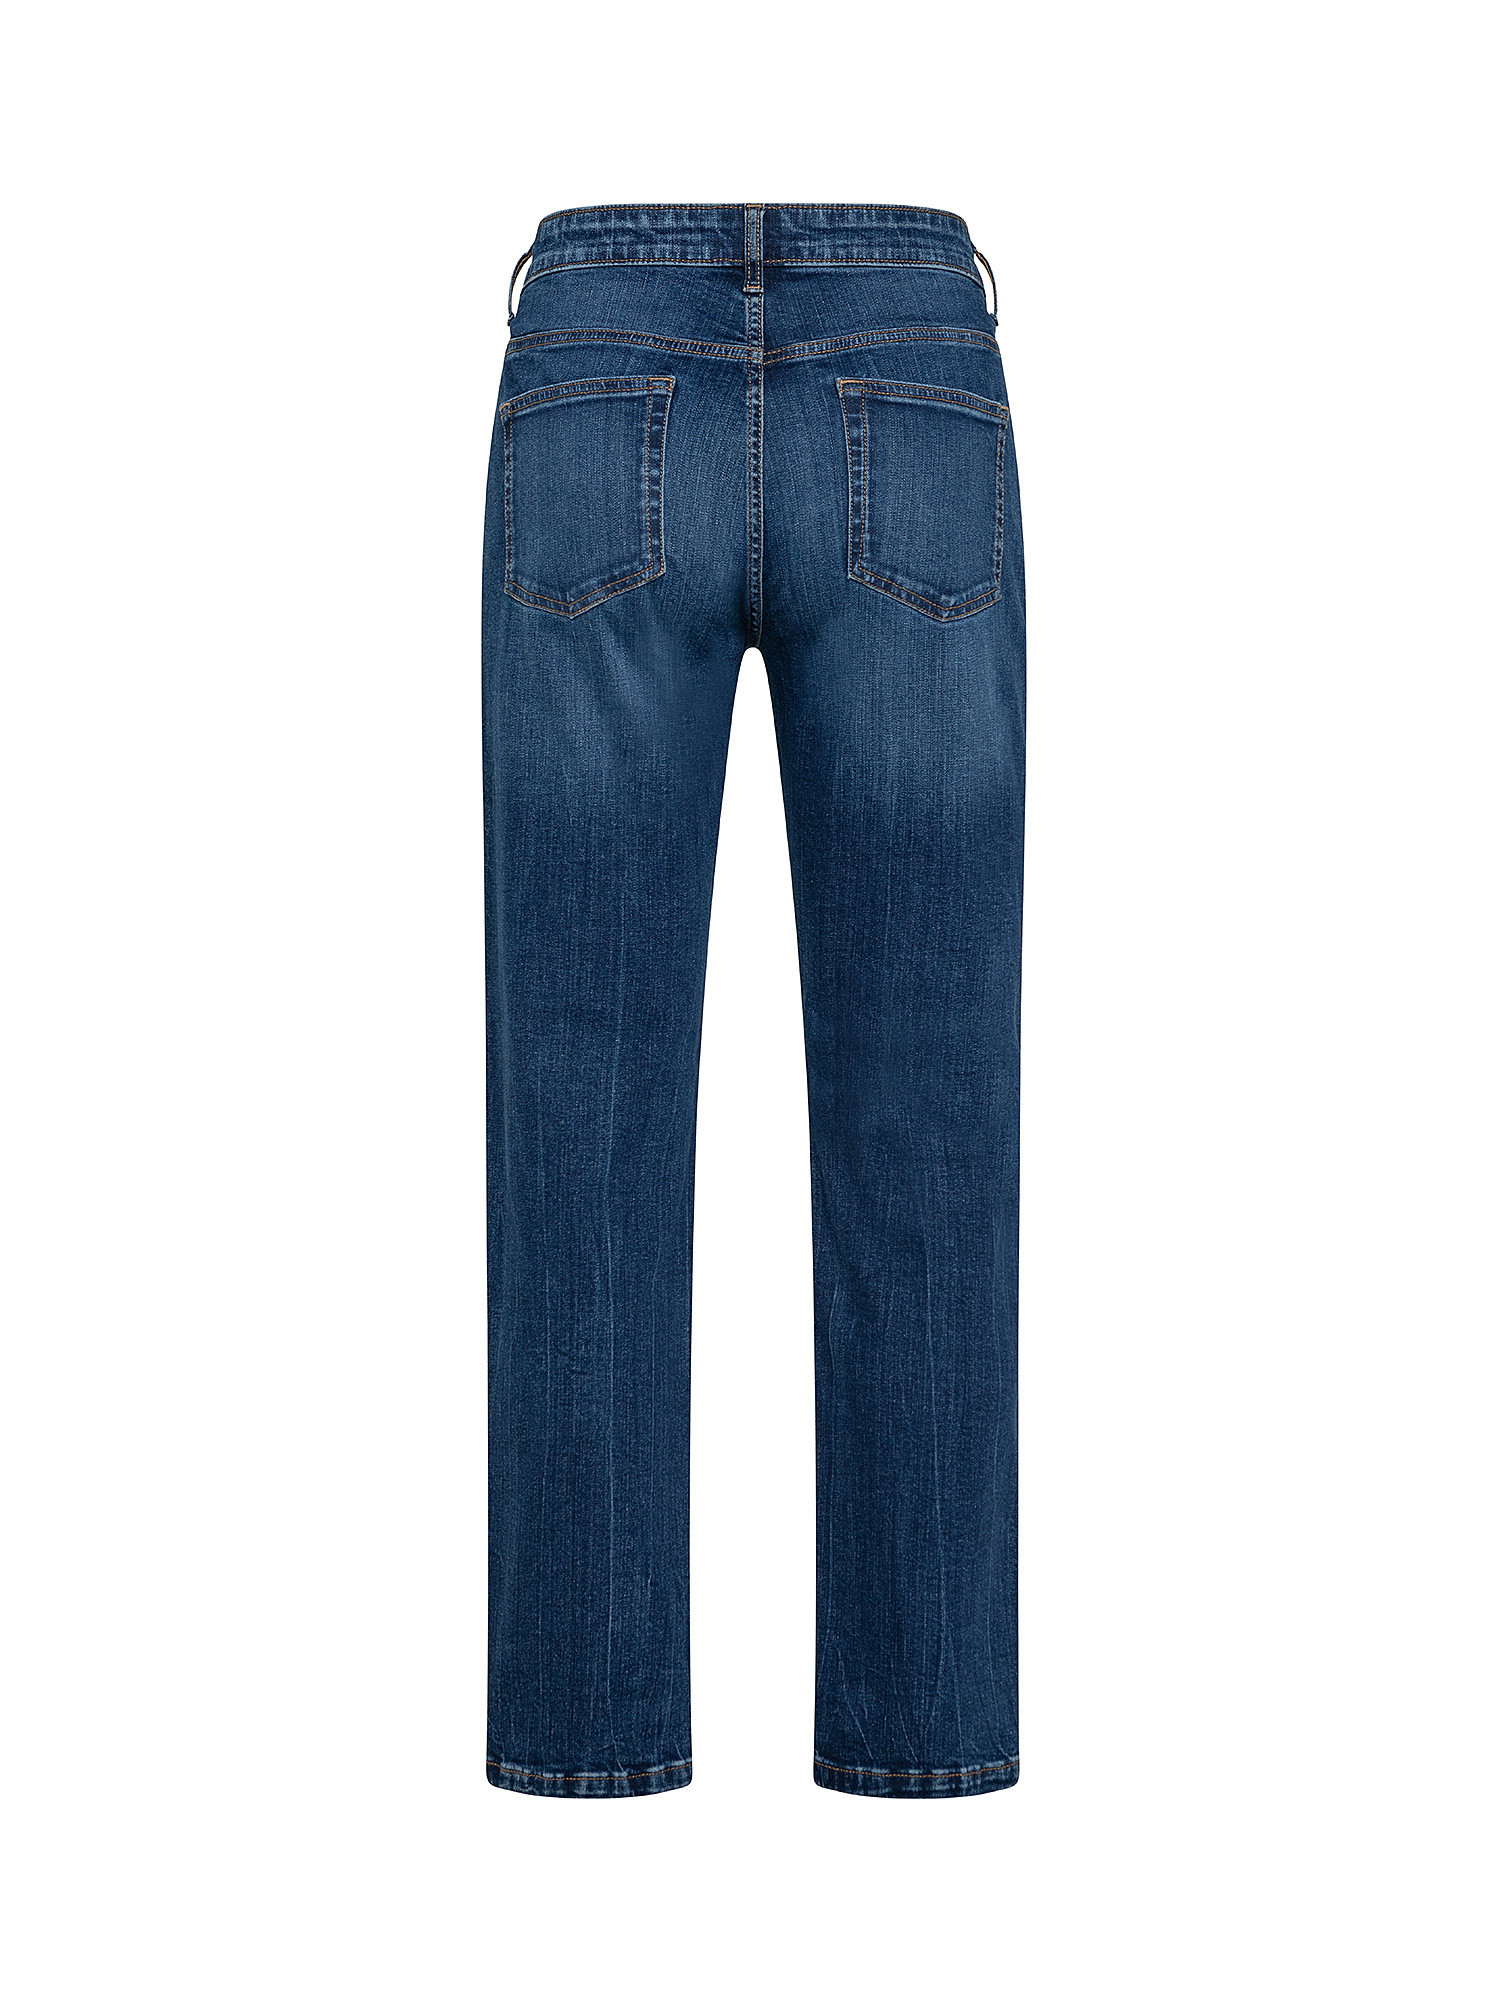 Jeans cinque tasche, Blu chiaro, large image number 1